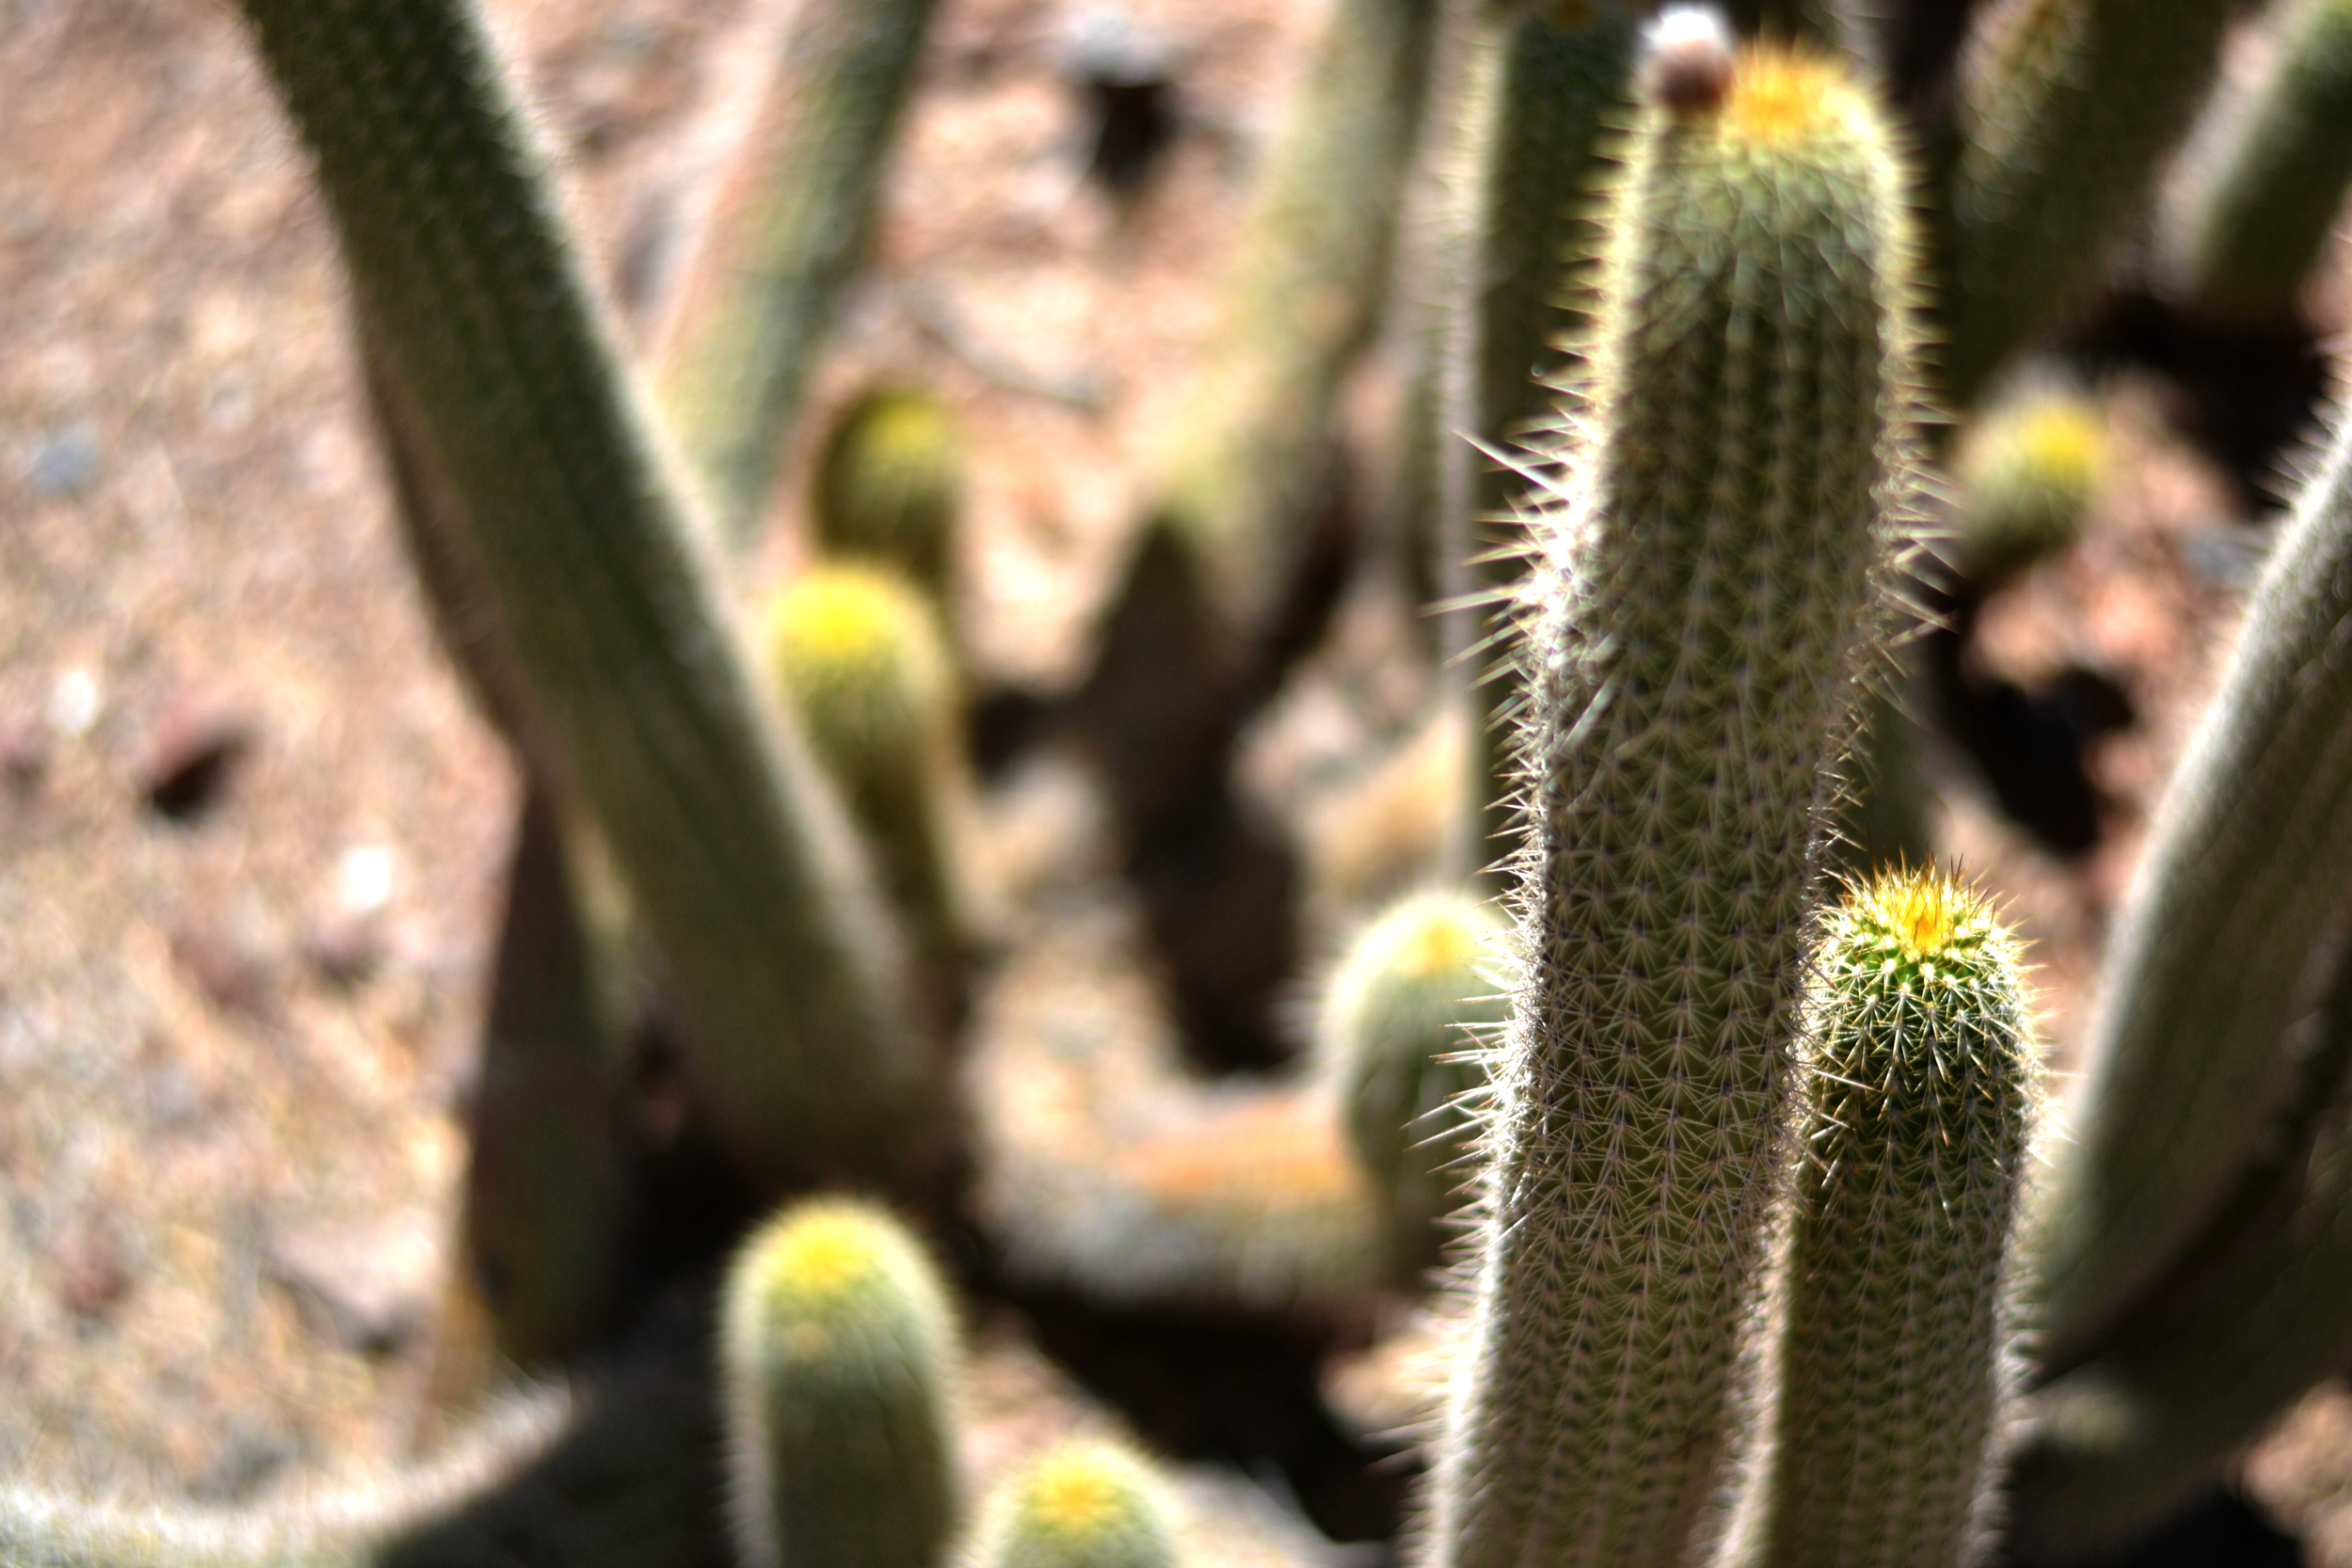 Cactus Snakes at the Desert &nbsp;Botanical Garden - So many different types of cactus!&nbsp;